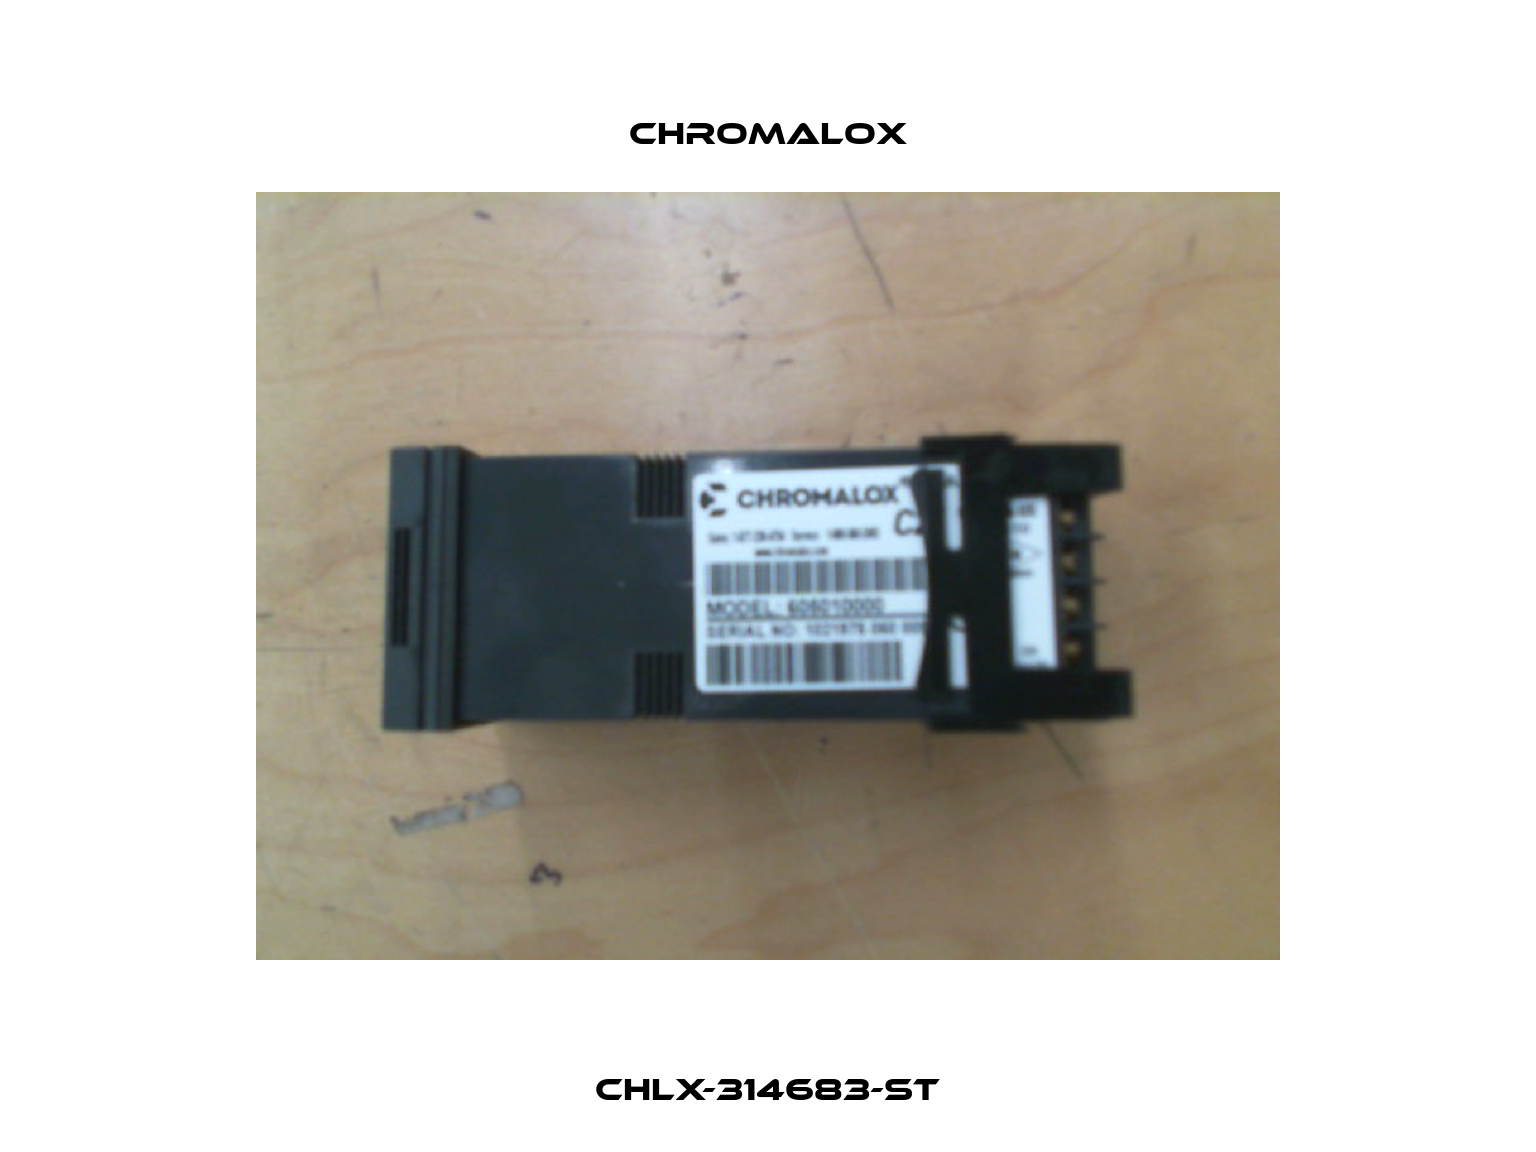 CHLX-314683-ST Chromalox